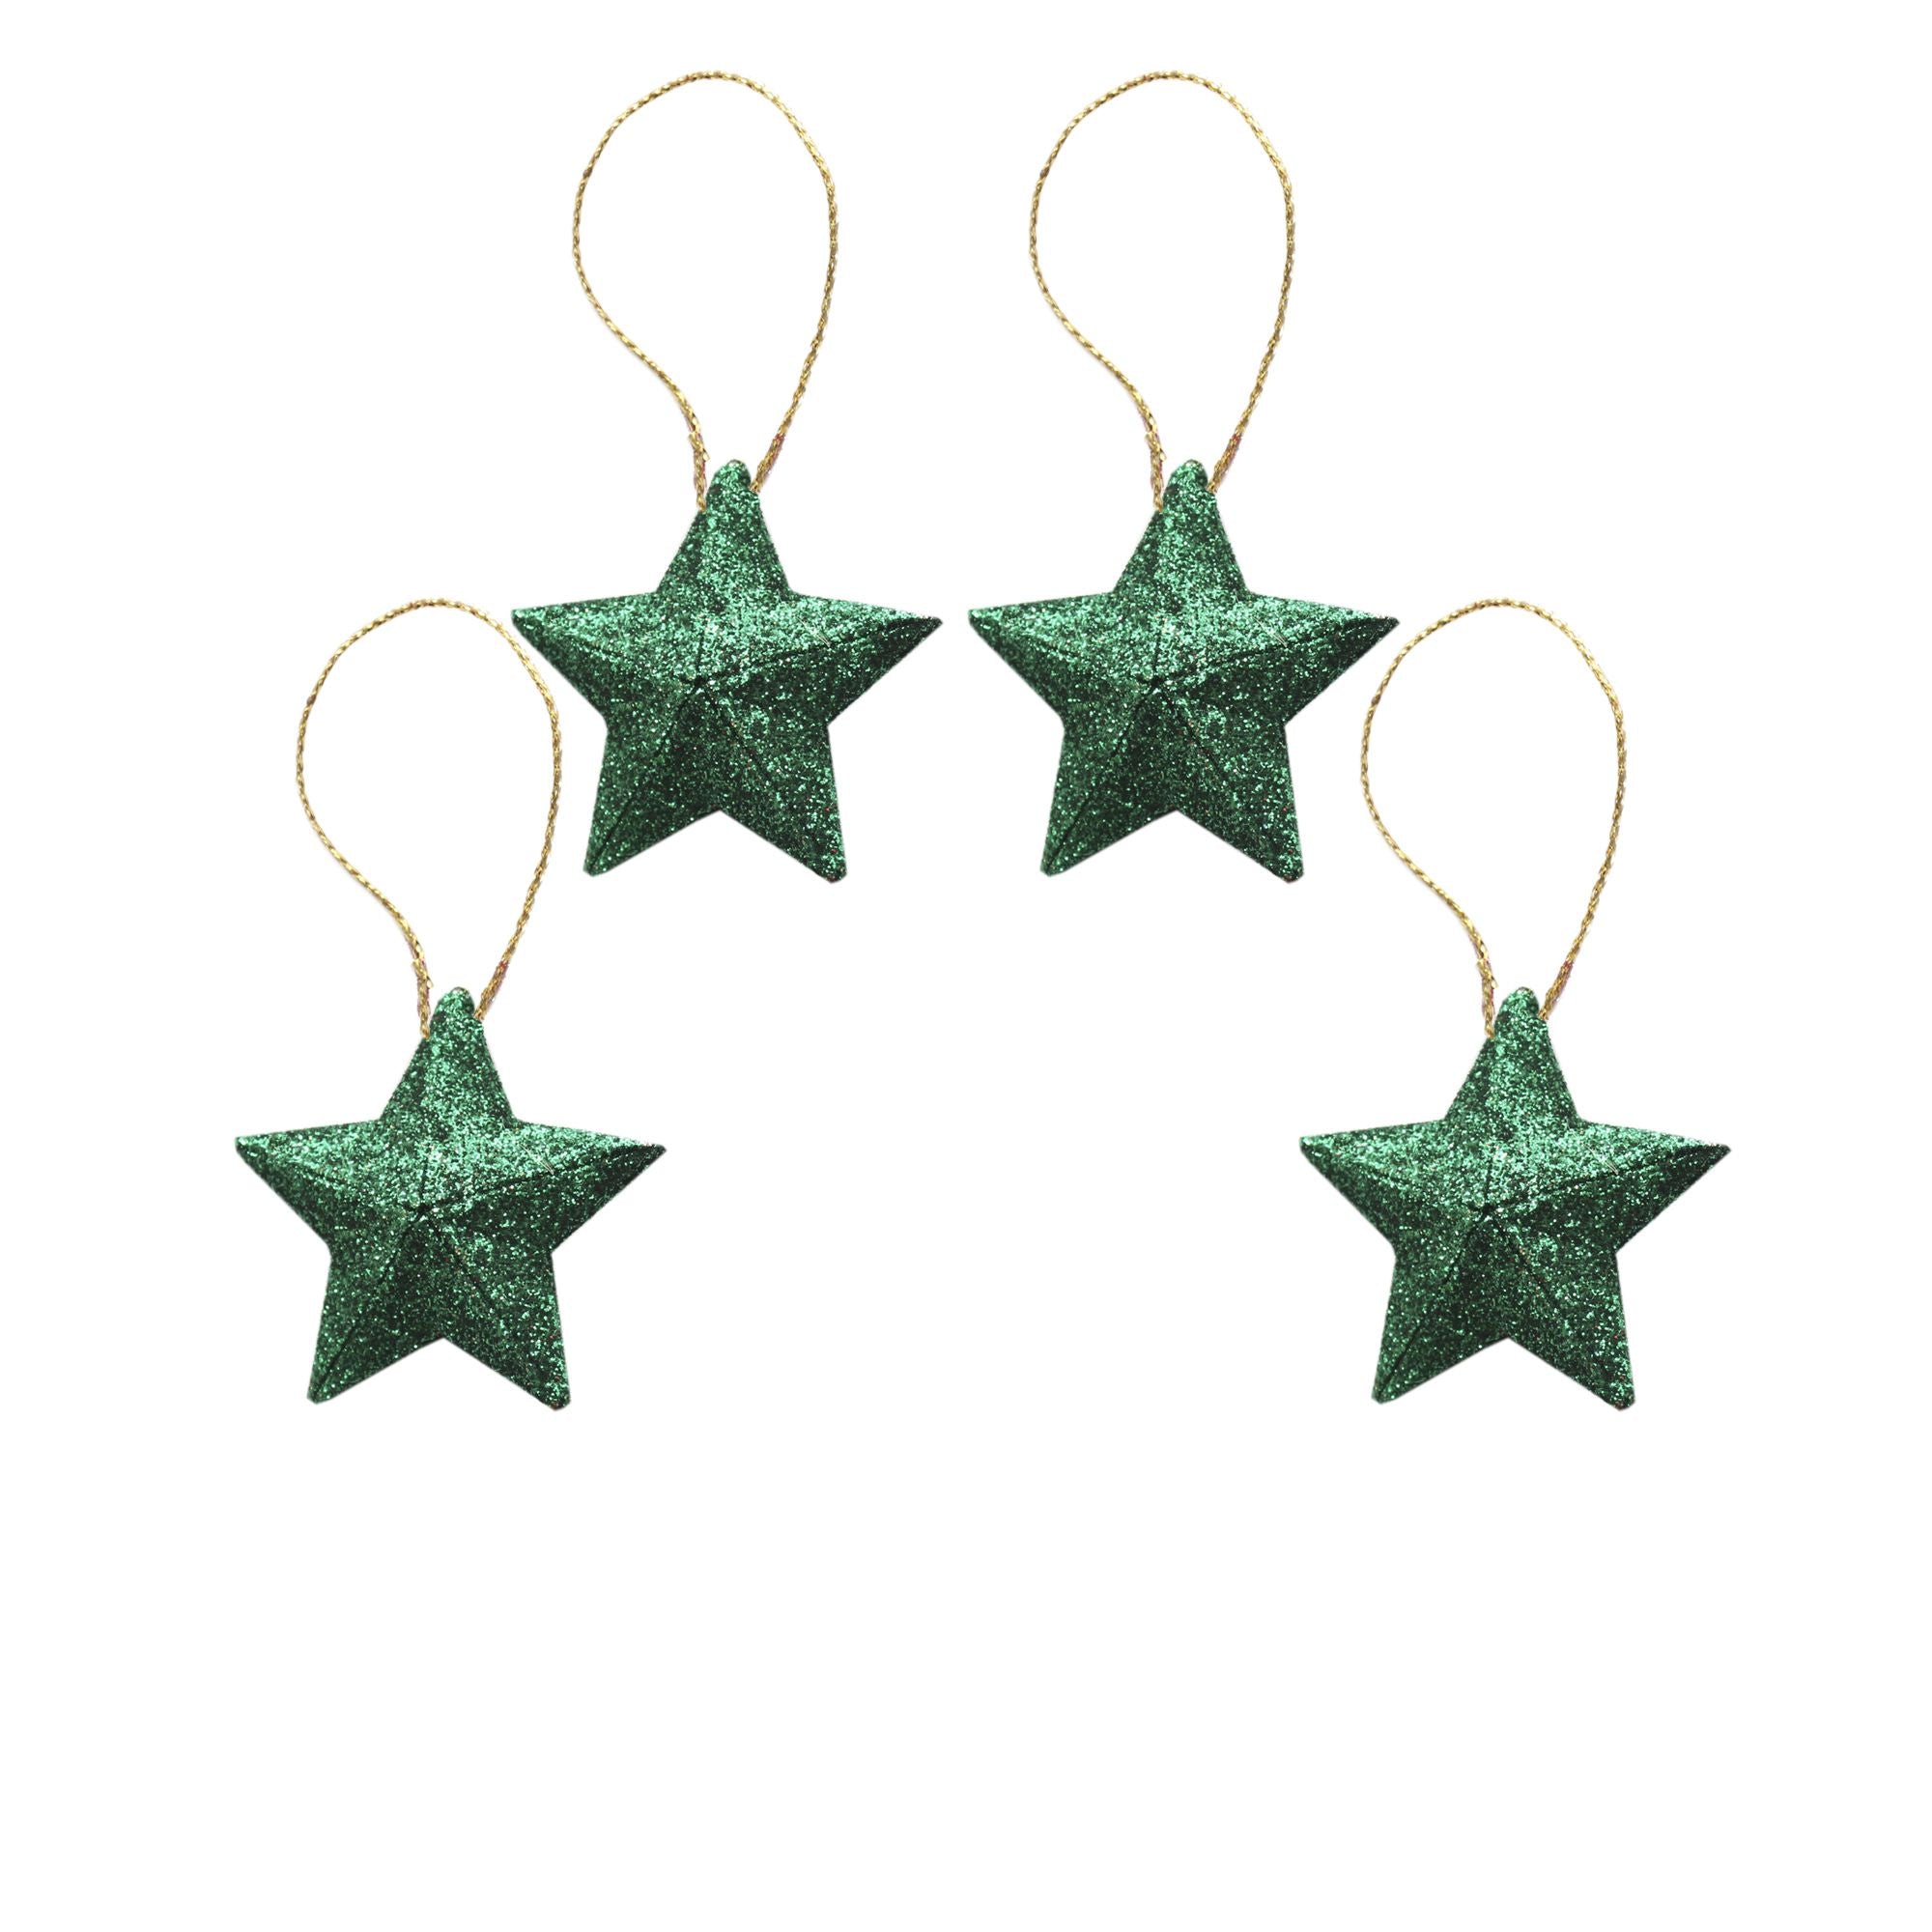 Handmade Christmas Ornaments - 3D Glitter Stars, 3.25inch, Green, 4pc